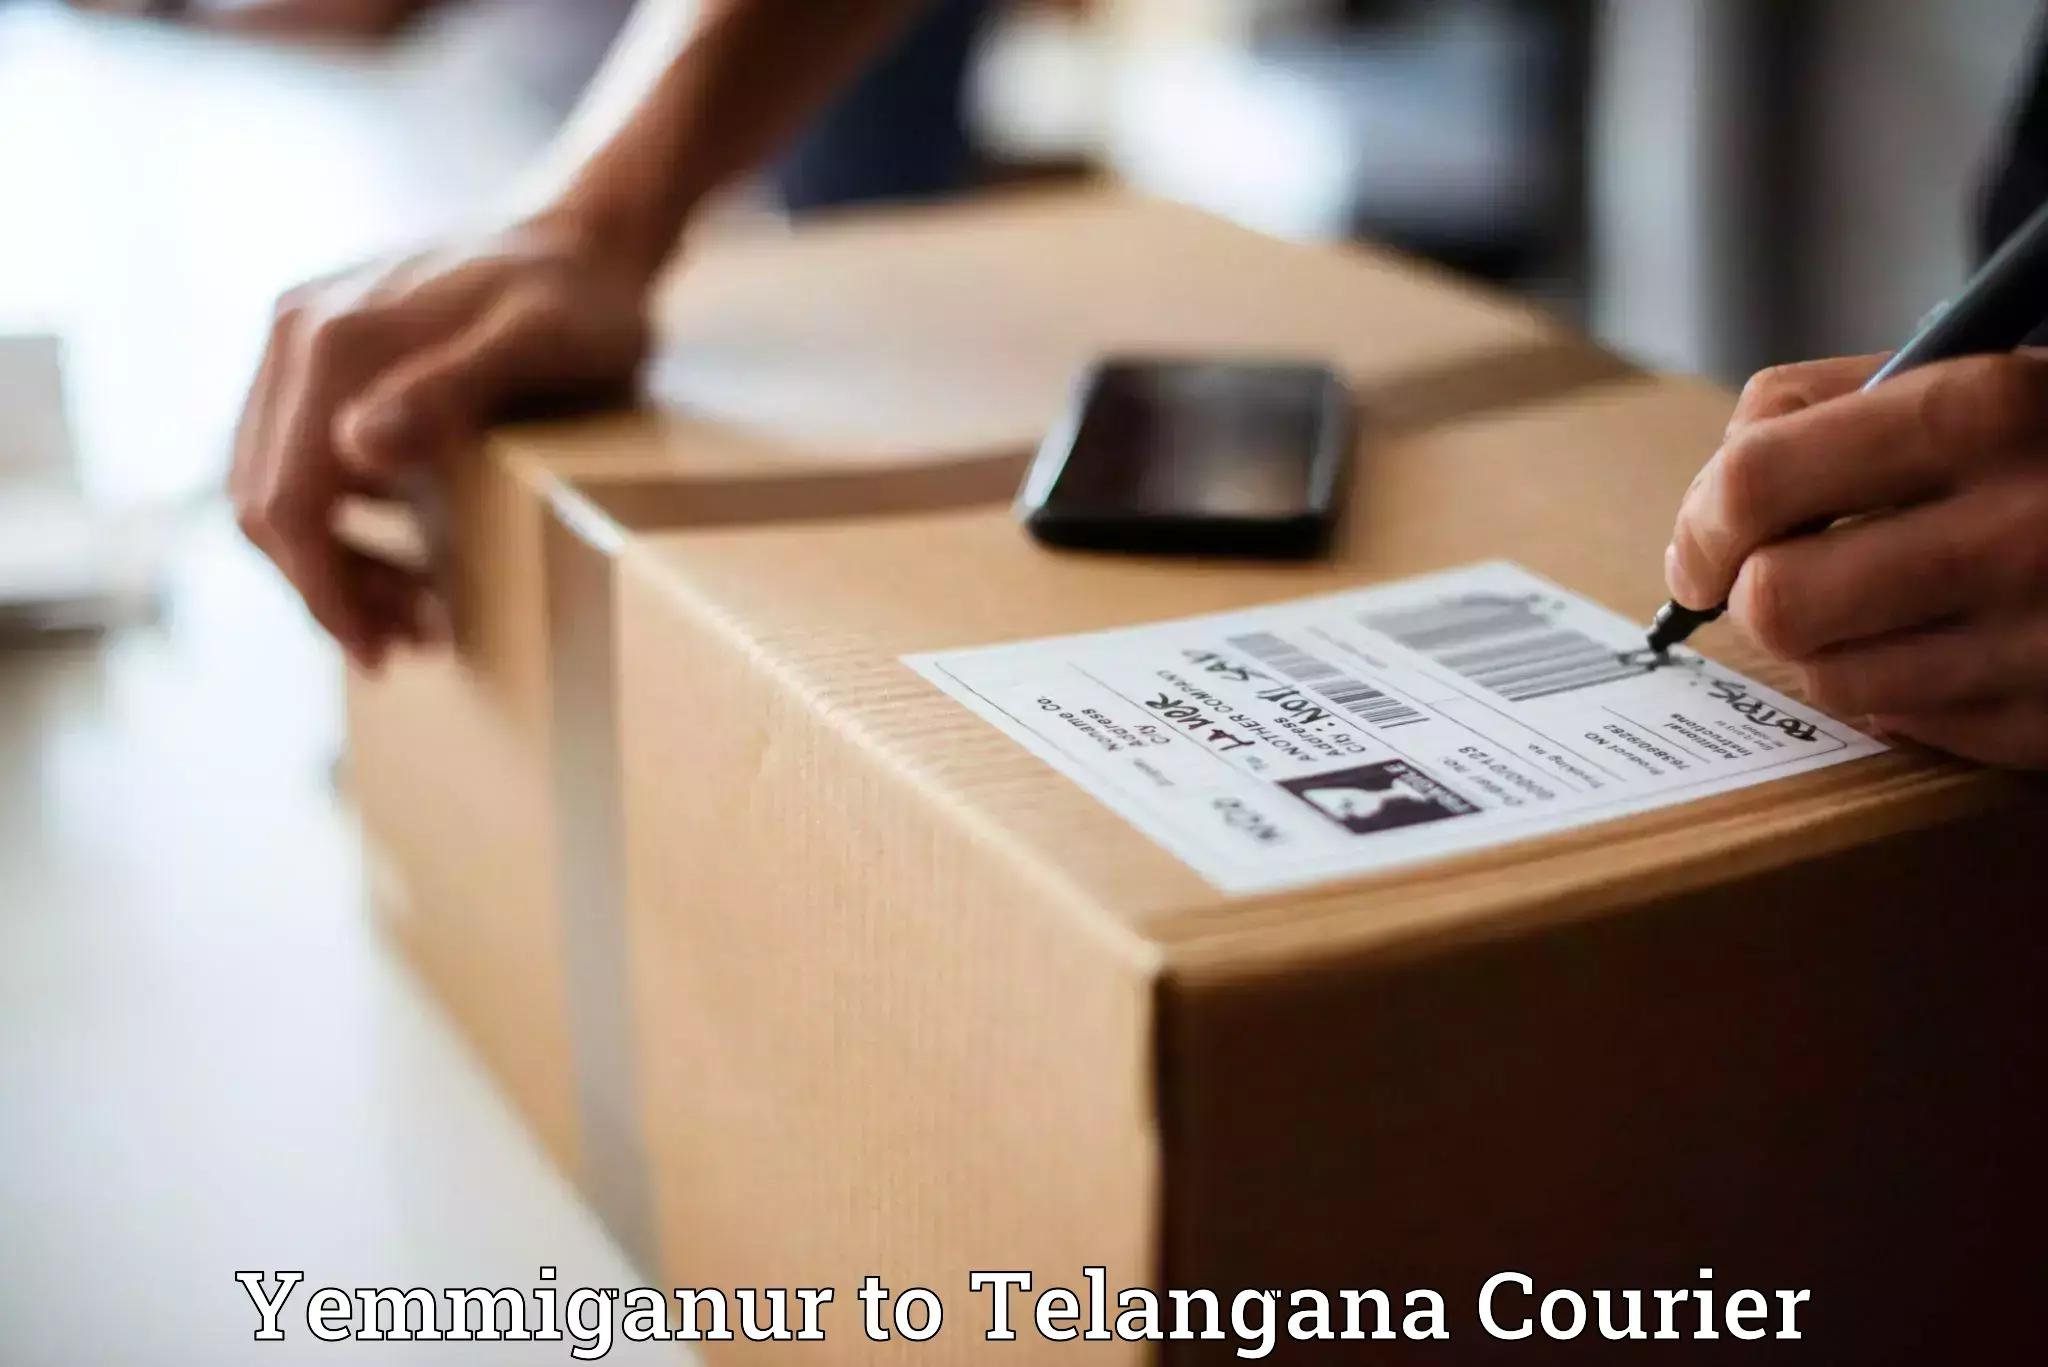 Courier service partnerships Yemmiganur to Khairatabad